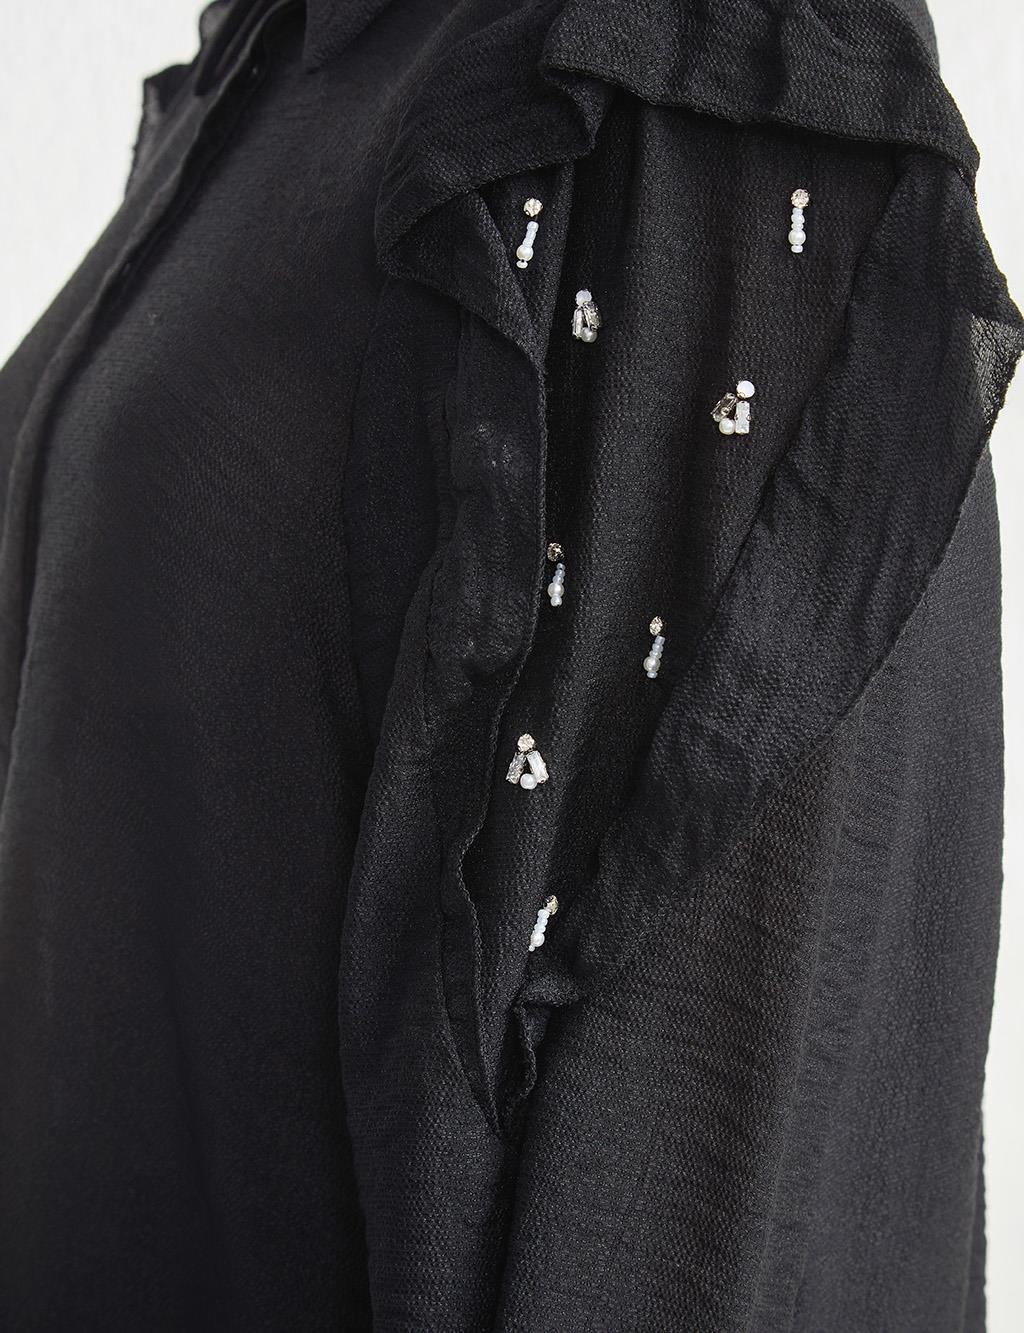 Ruffled Embroidered Sleeves Shirt Black